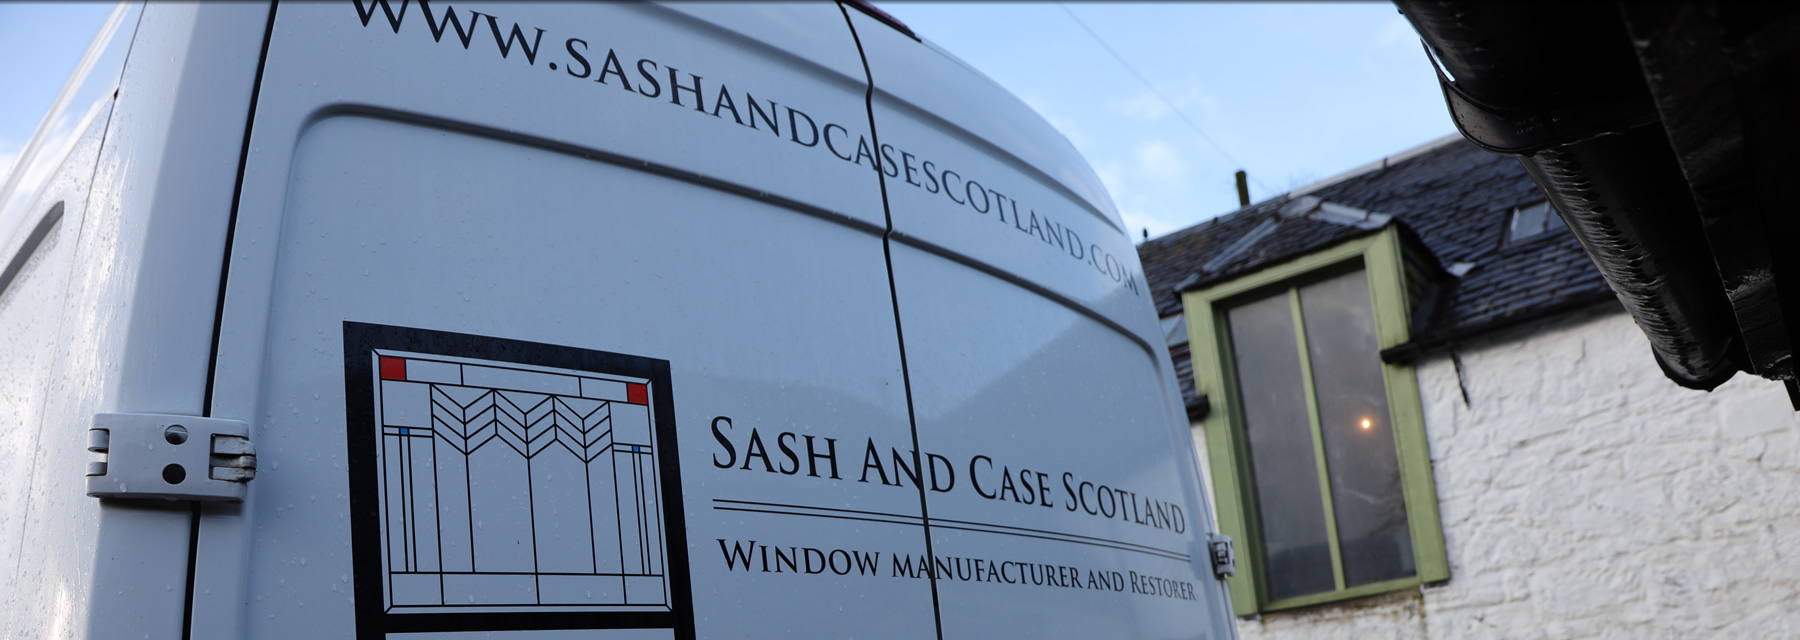 Sash and Case Scotland